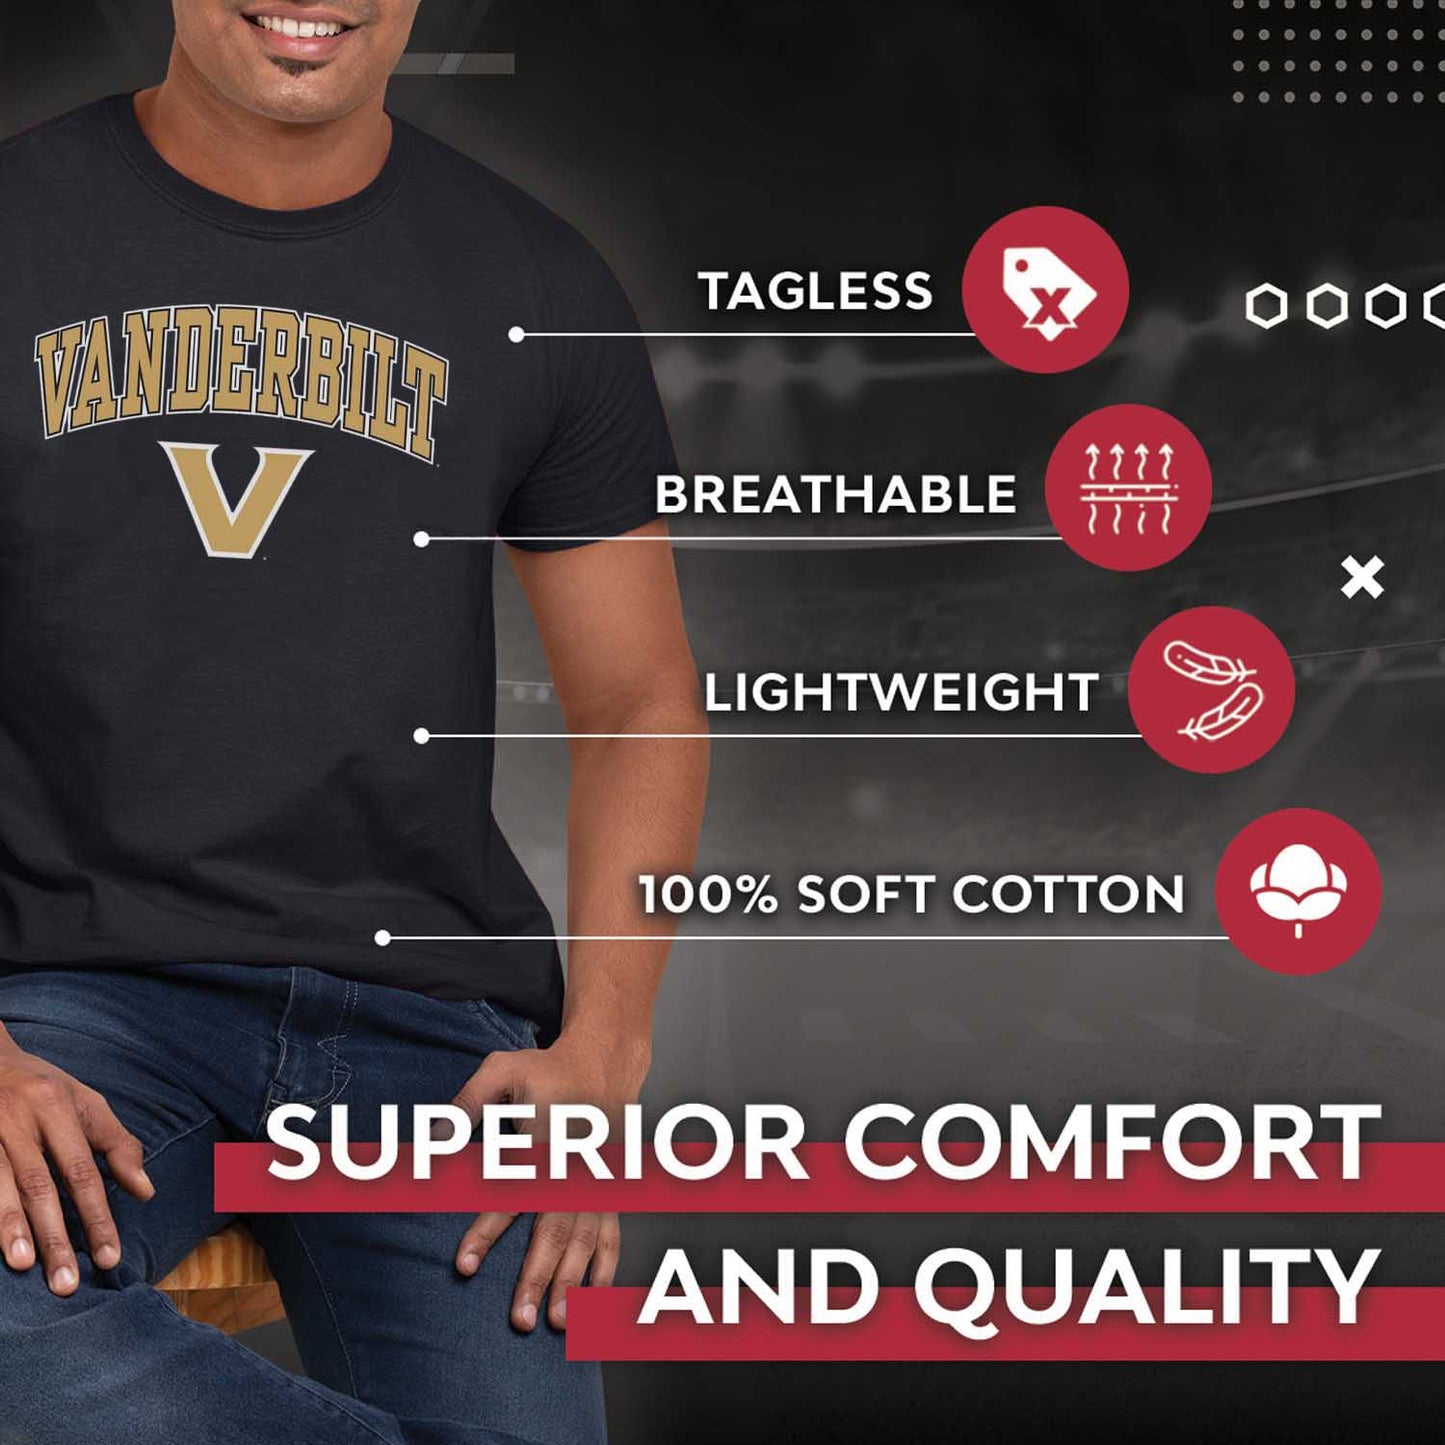 Vanderbilt Commodores NCAA Adult Gameday Cotton T-Shirt - Black